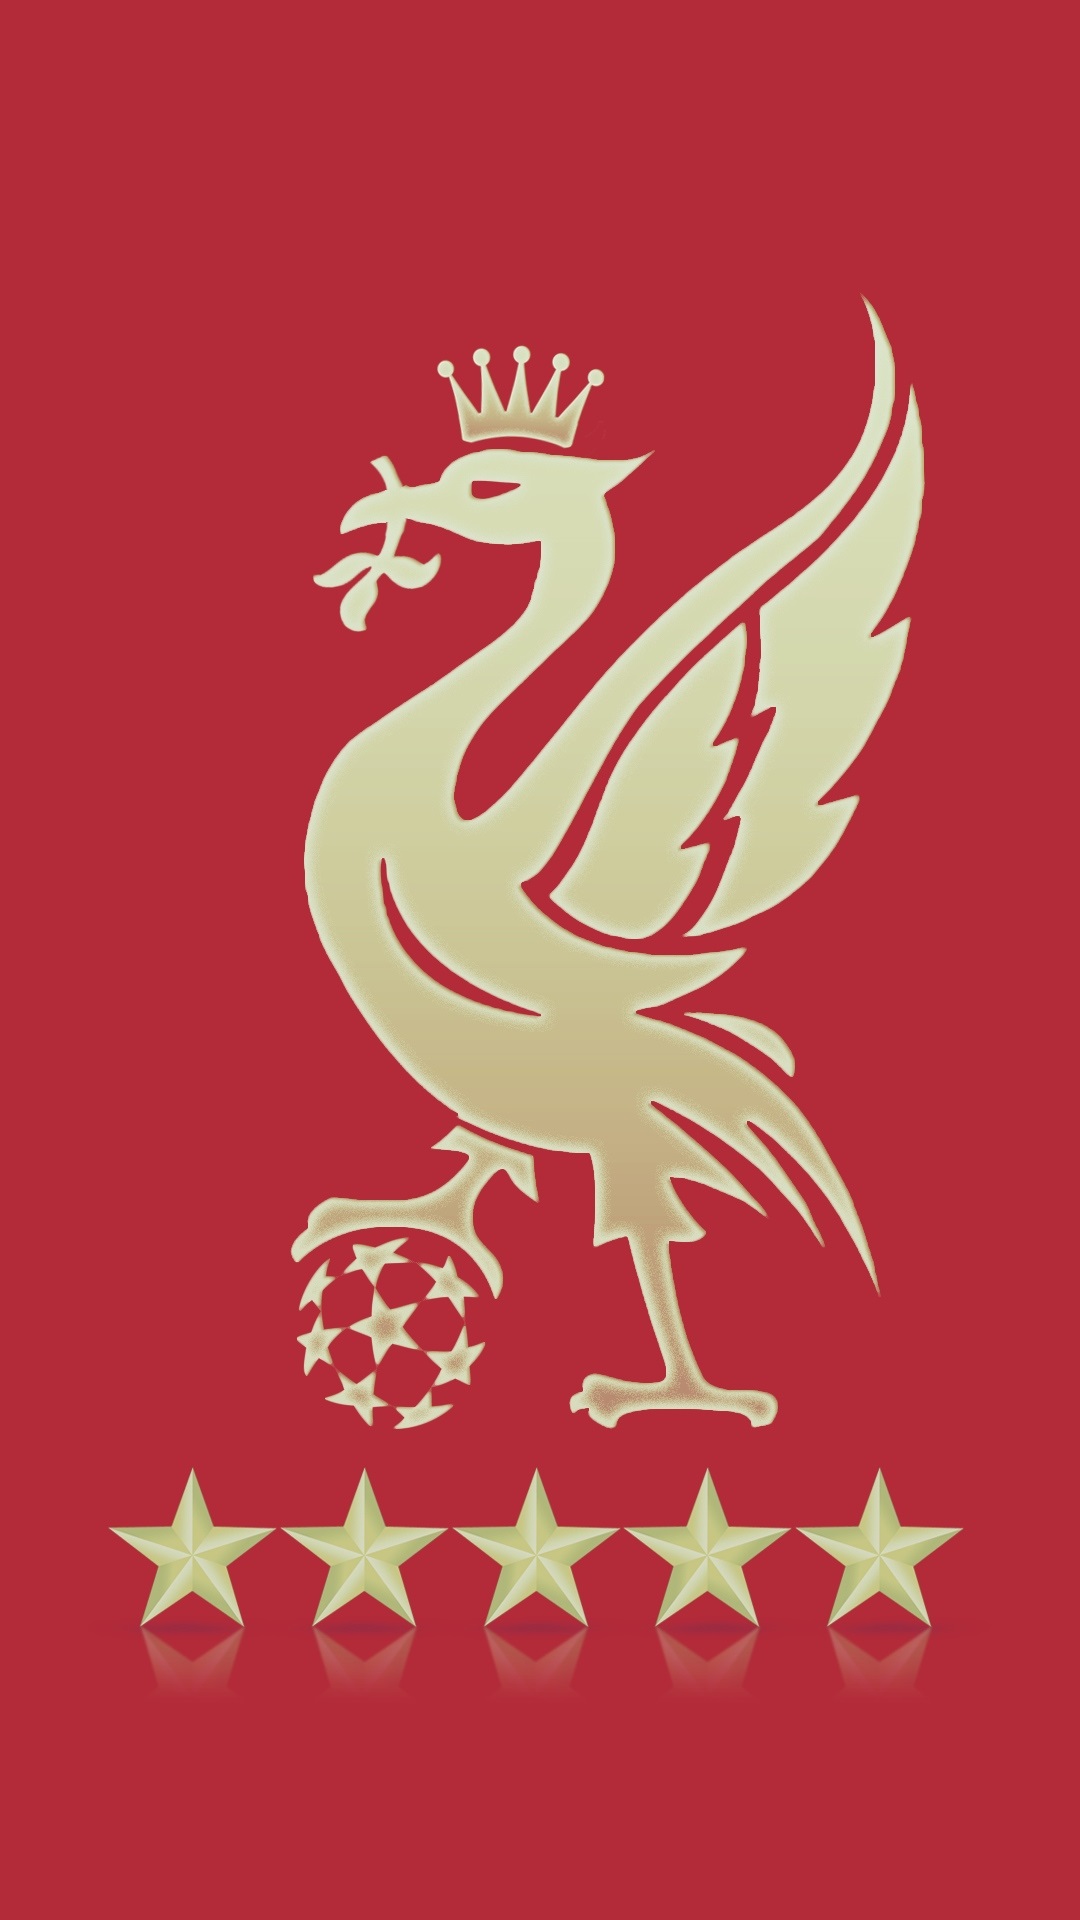 Liverpool Fc Twitter Header - HD Wallpaper 